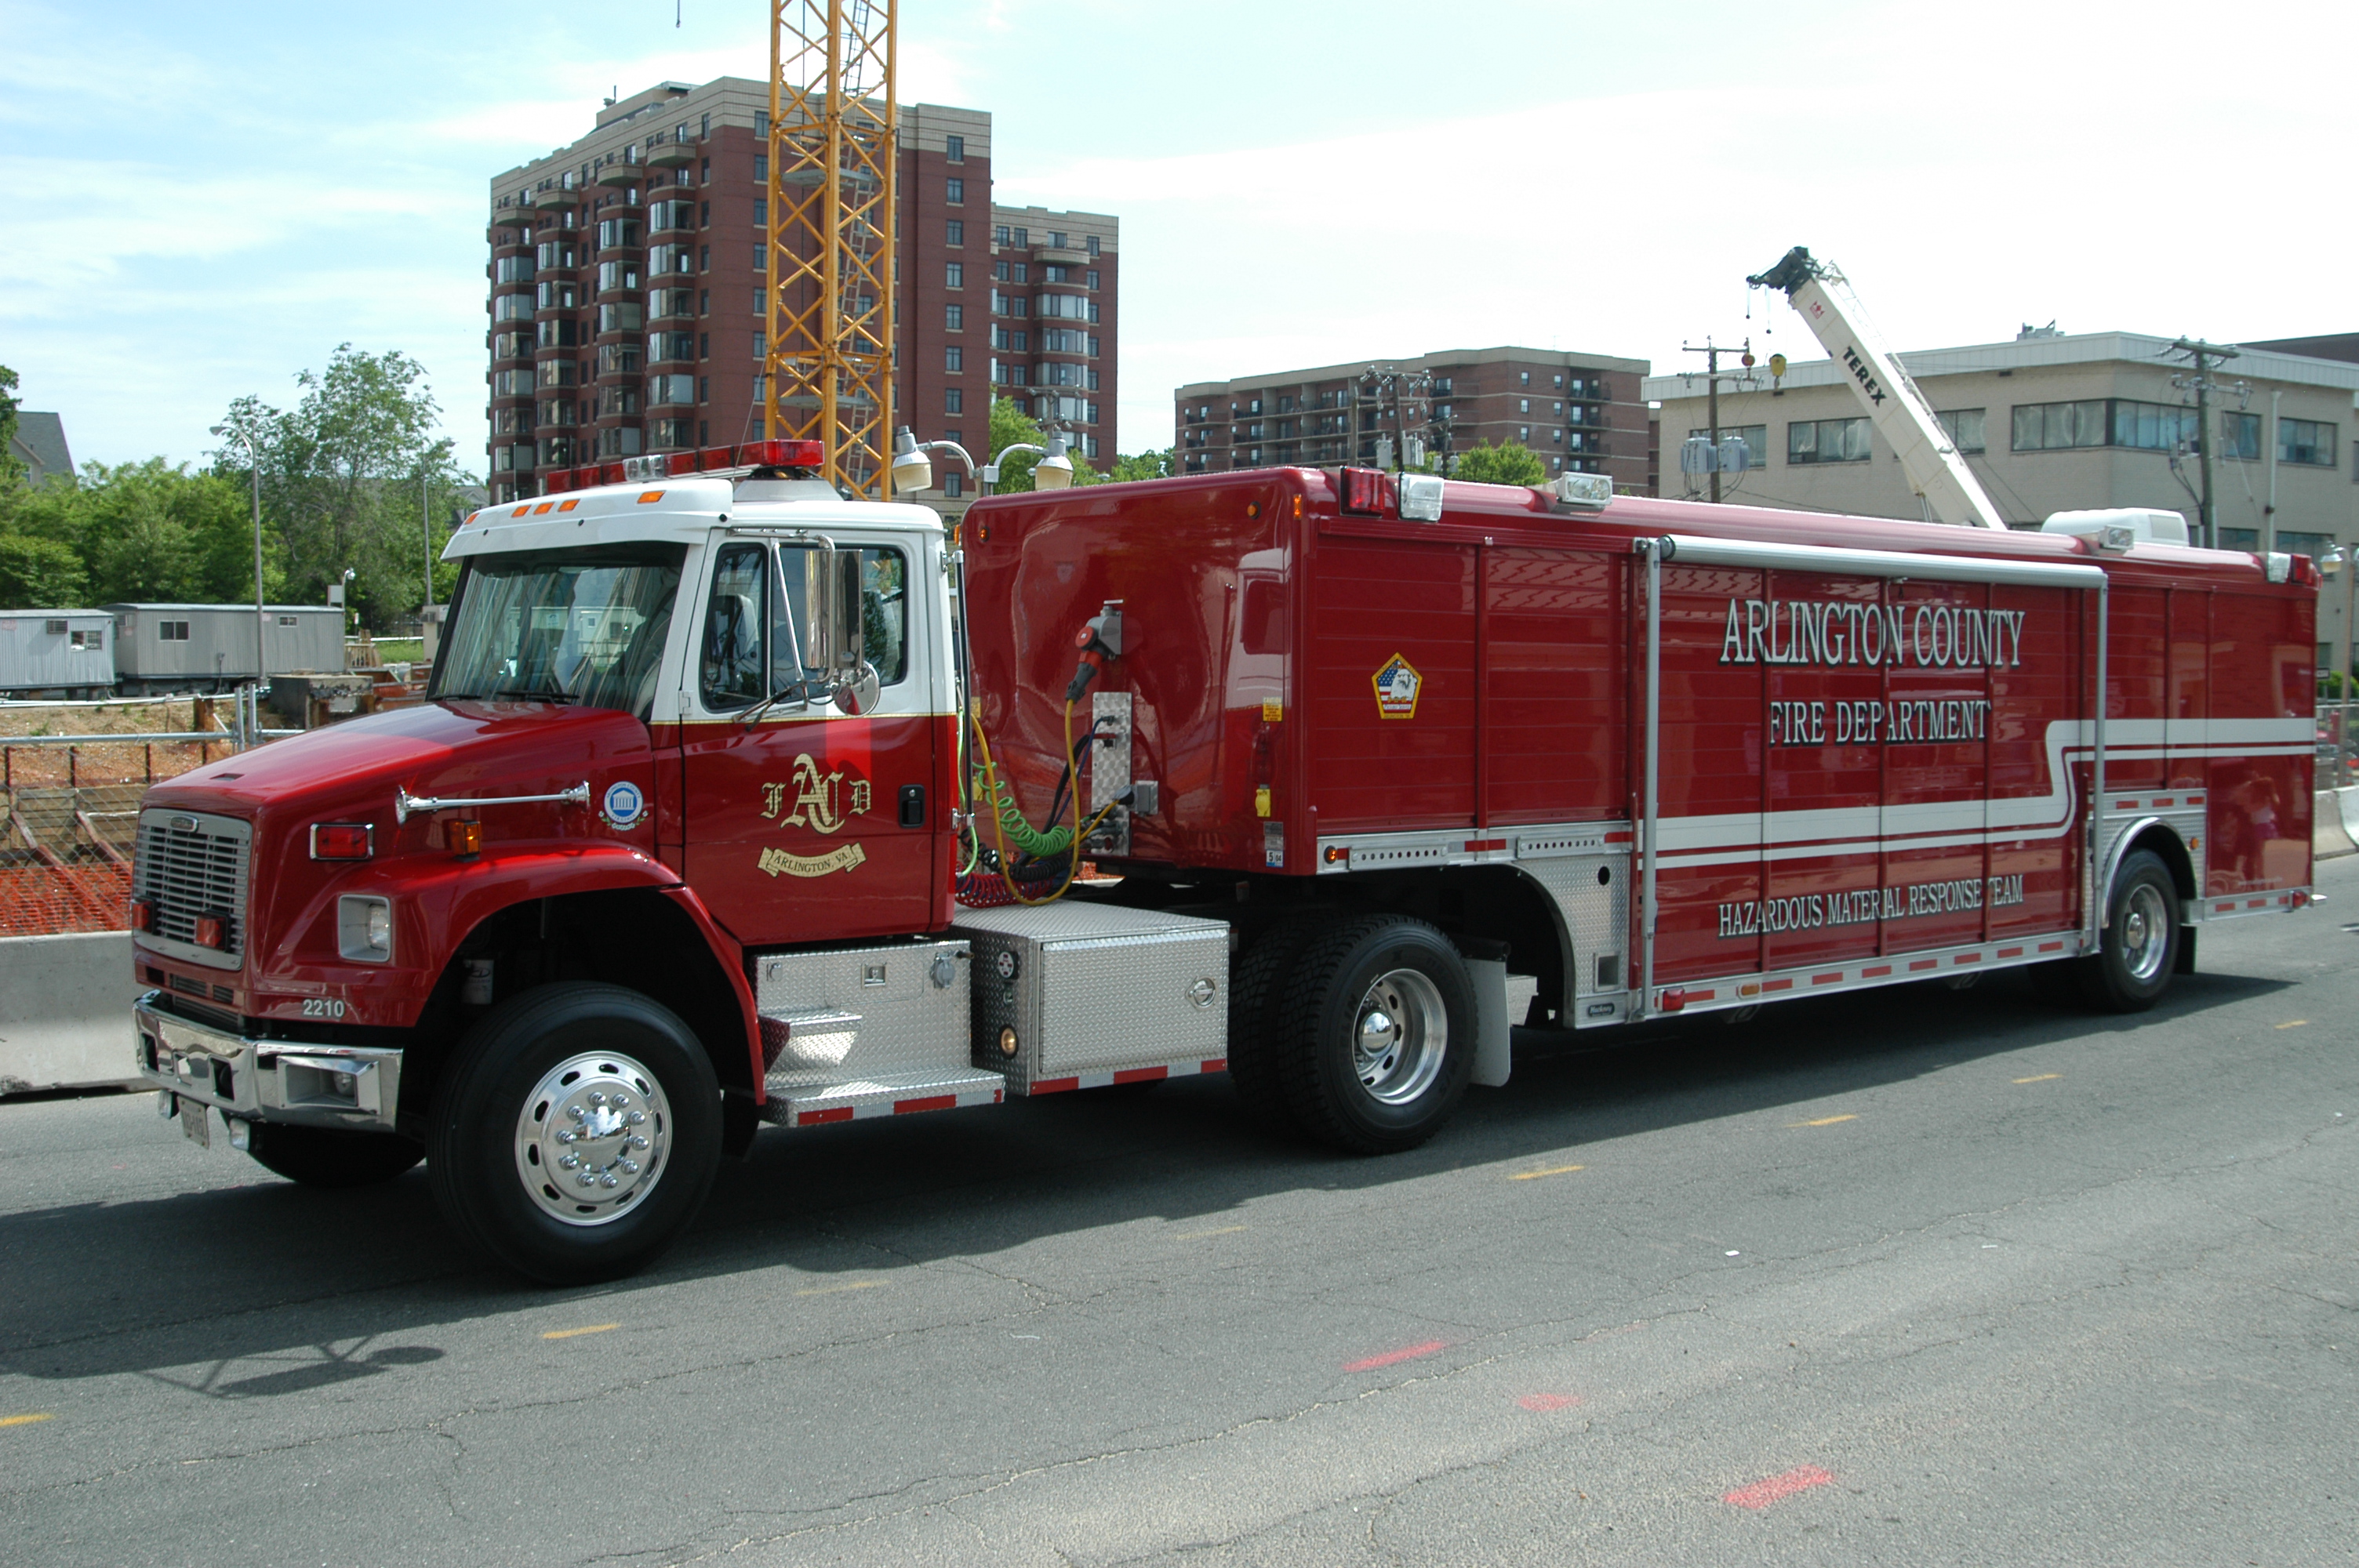 File:Fire truck Arlington.jpg